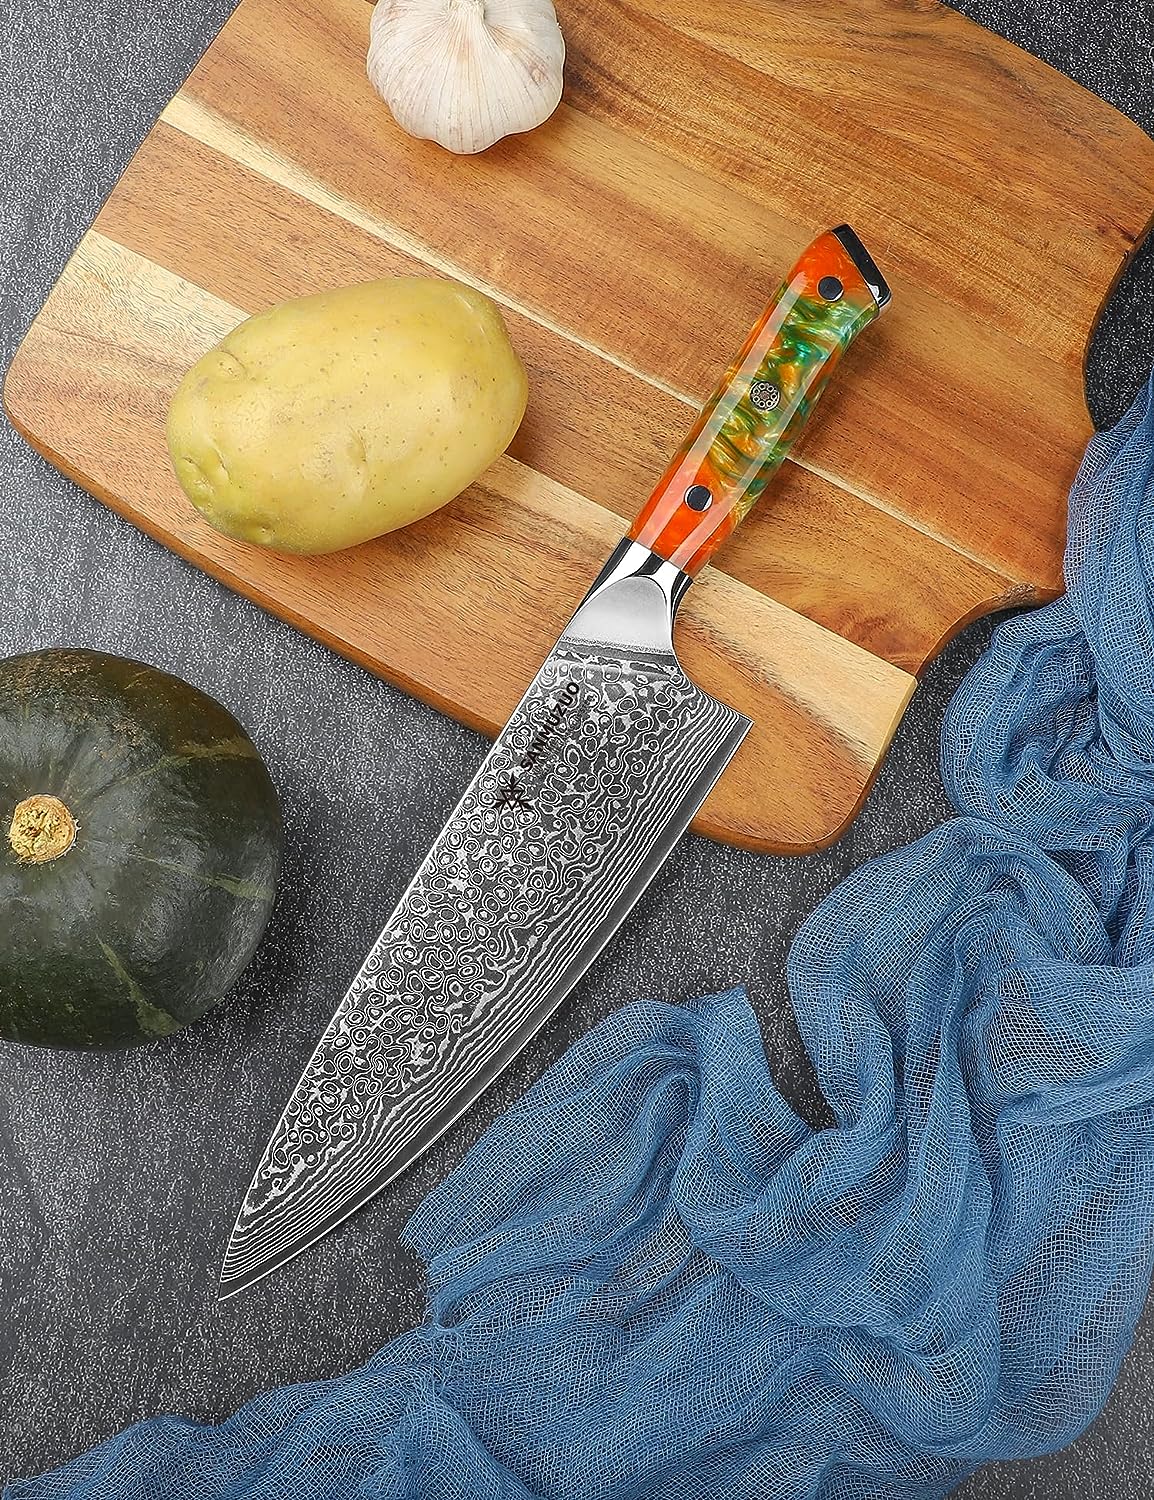 vg10 damascus steel kitchen knife